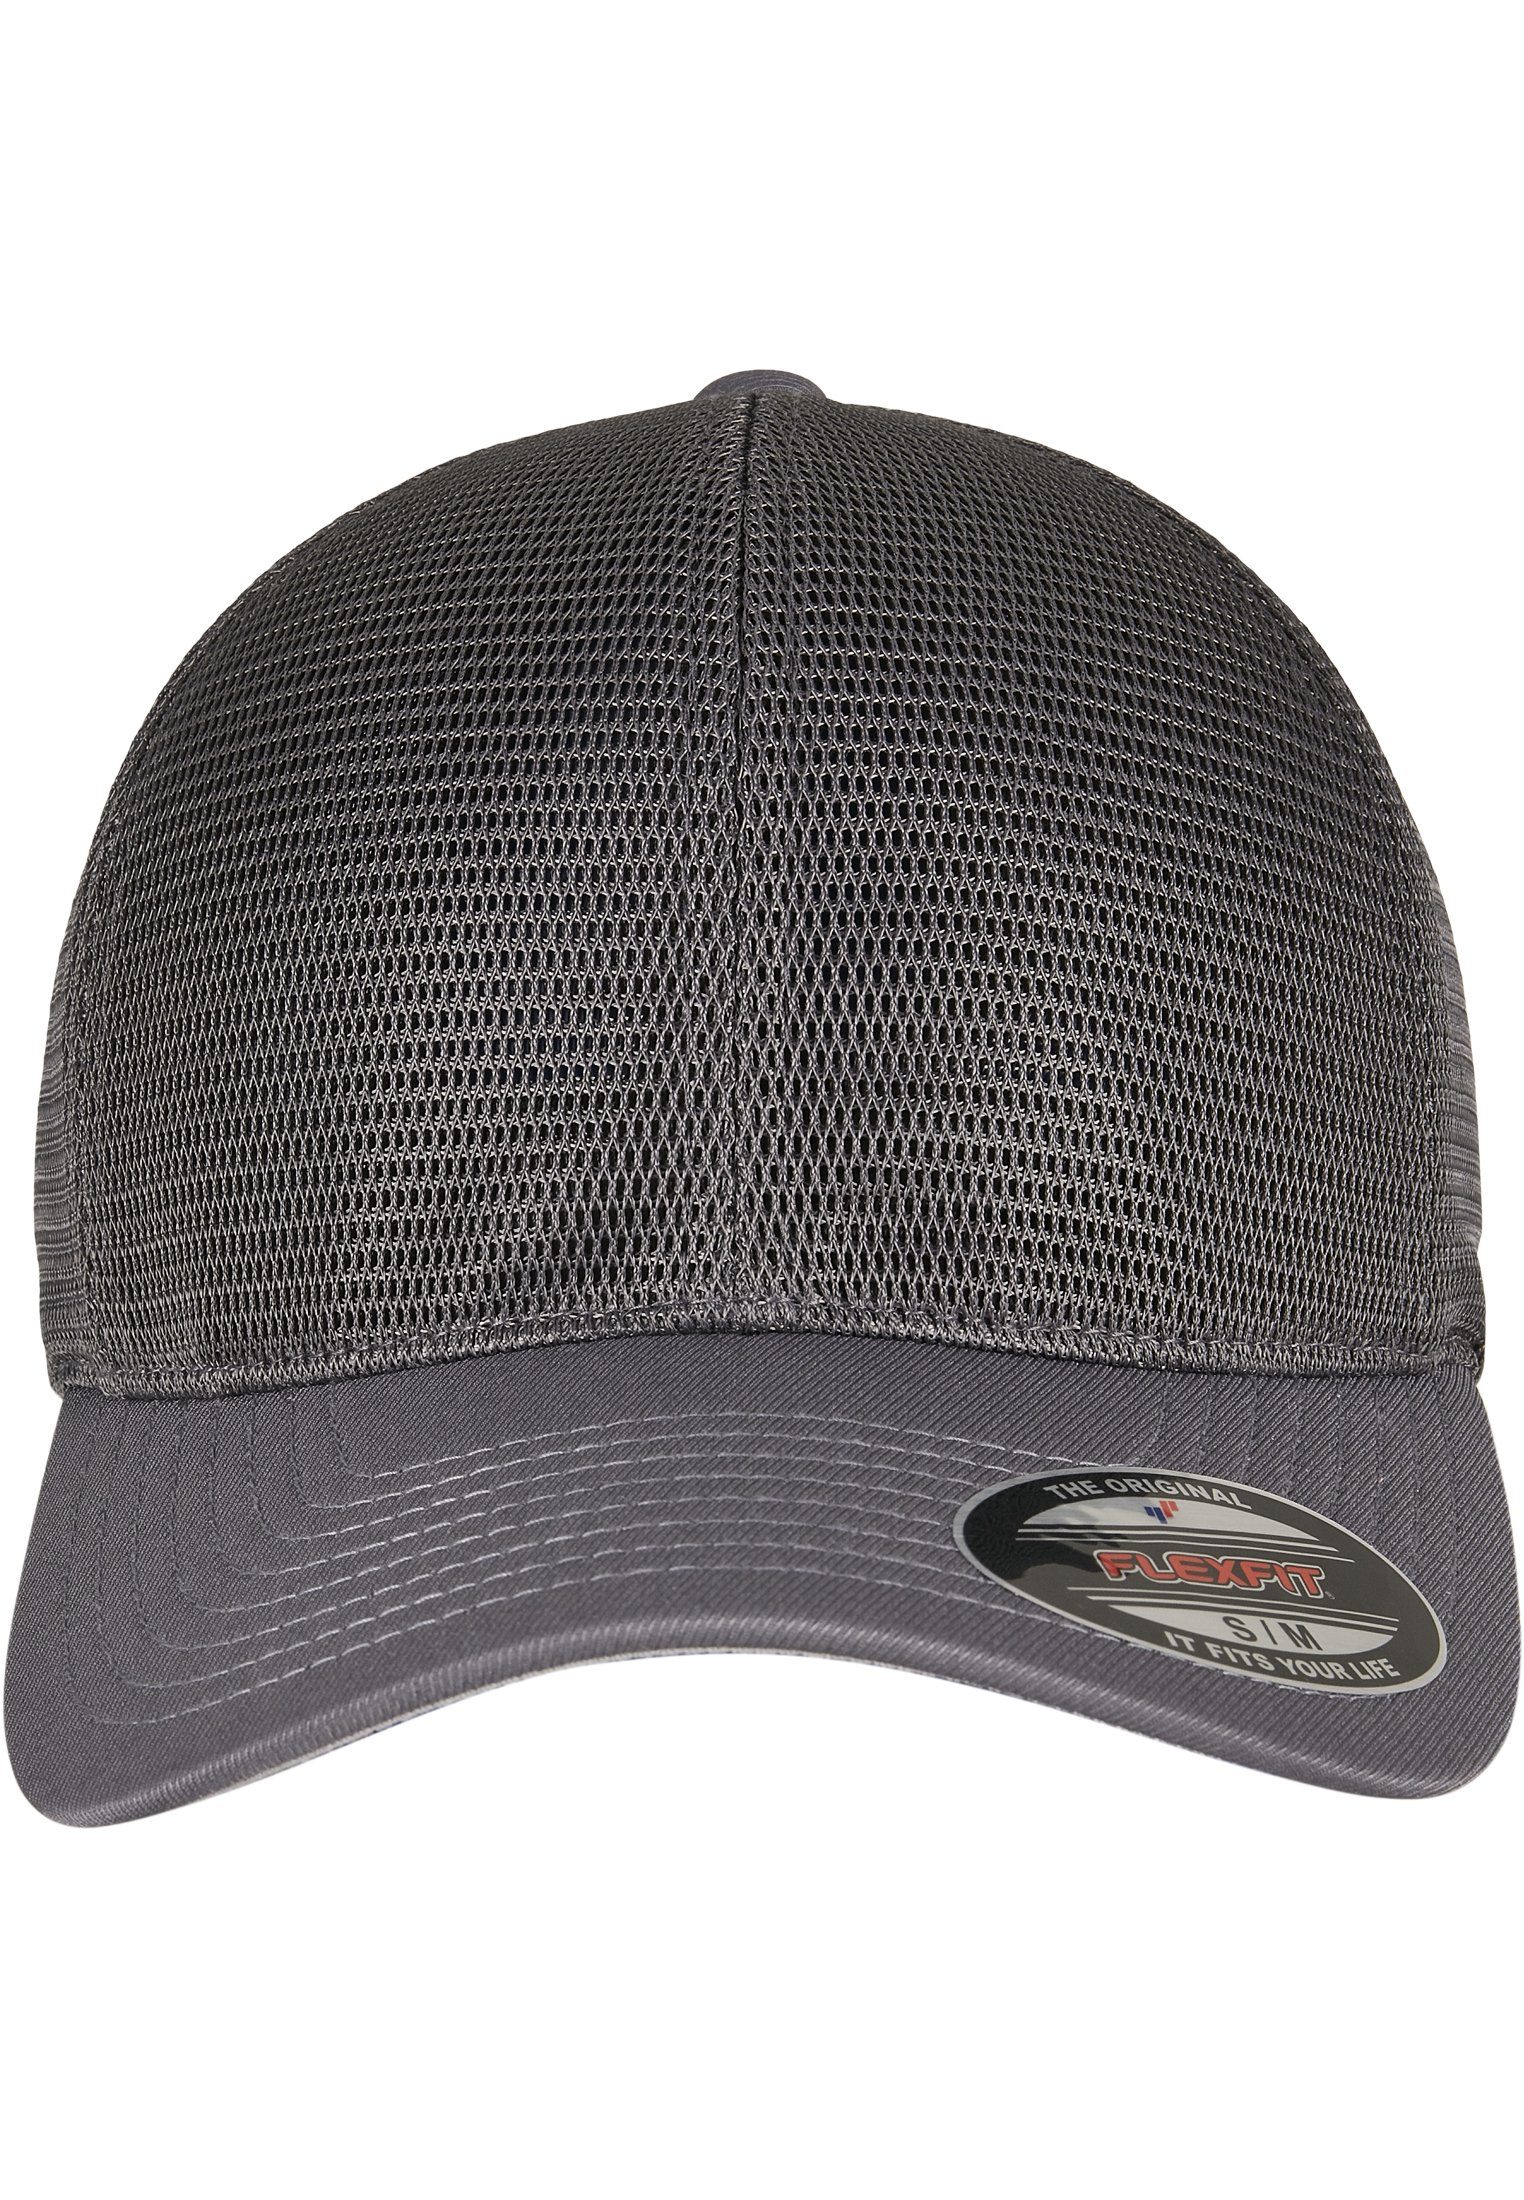 360 FLEXFIT Cap Flexfit Flex CAP charcoal Accessoires OMNIMESH